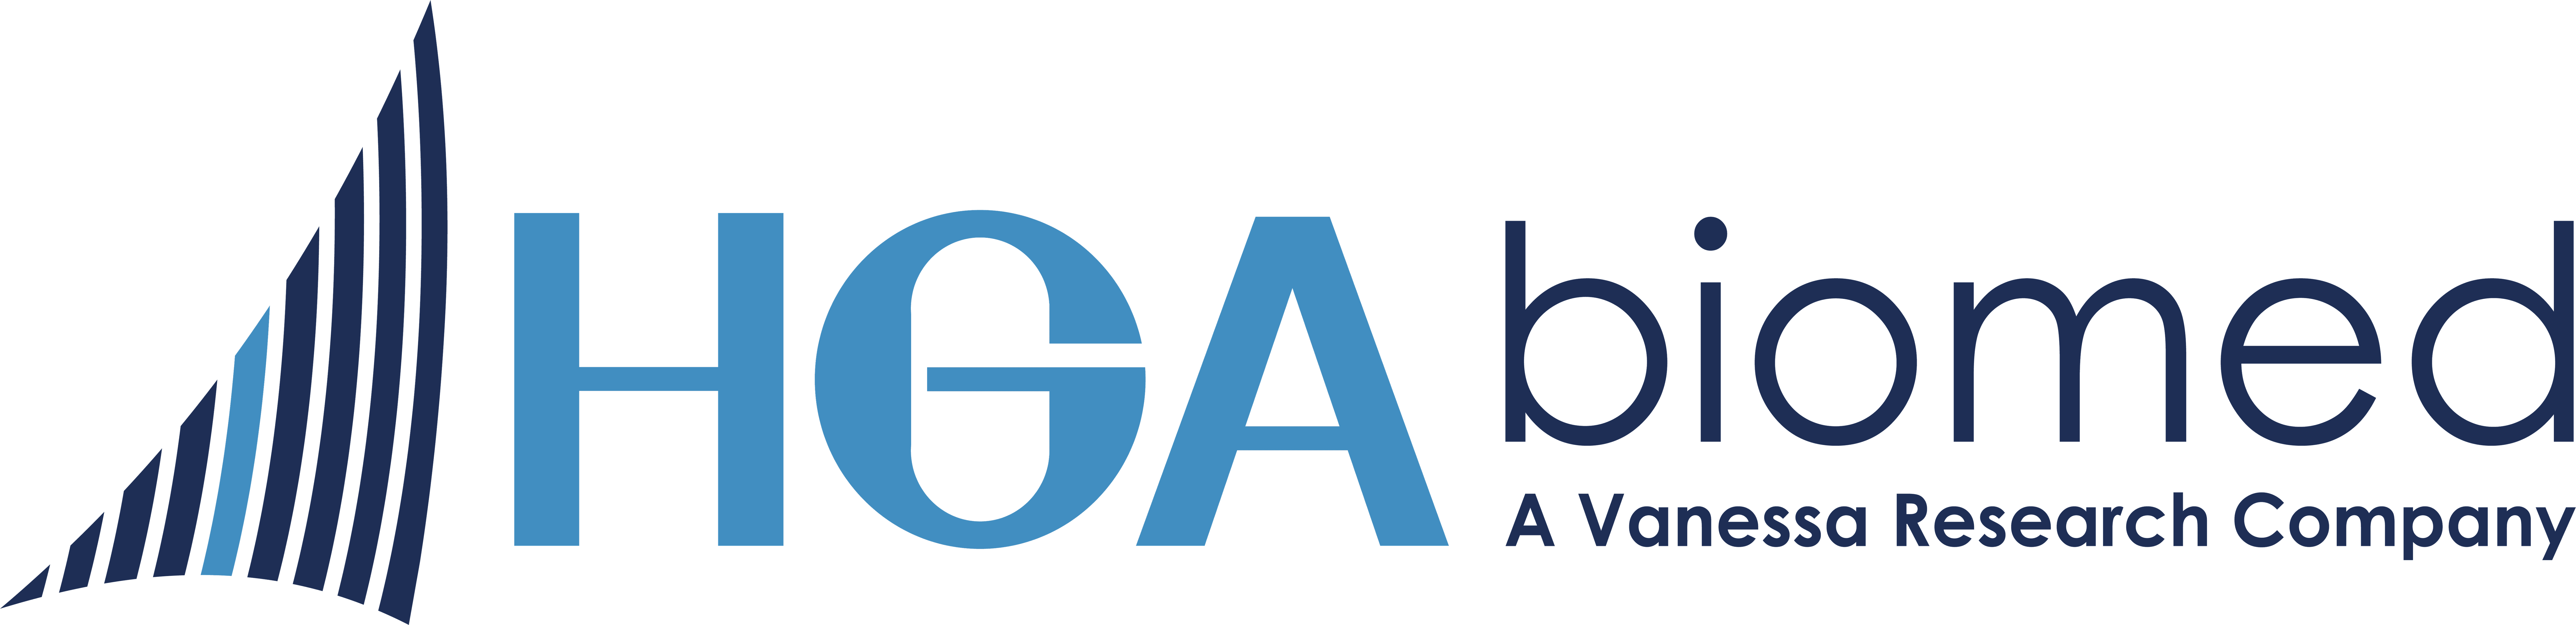 HGA Biomed Logo